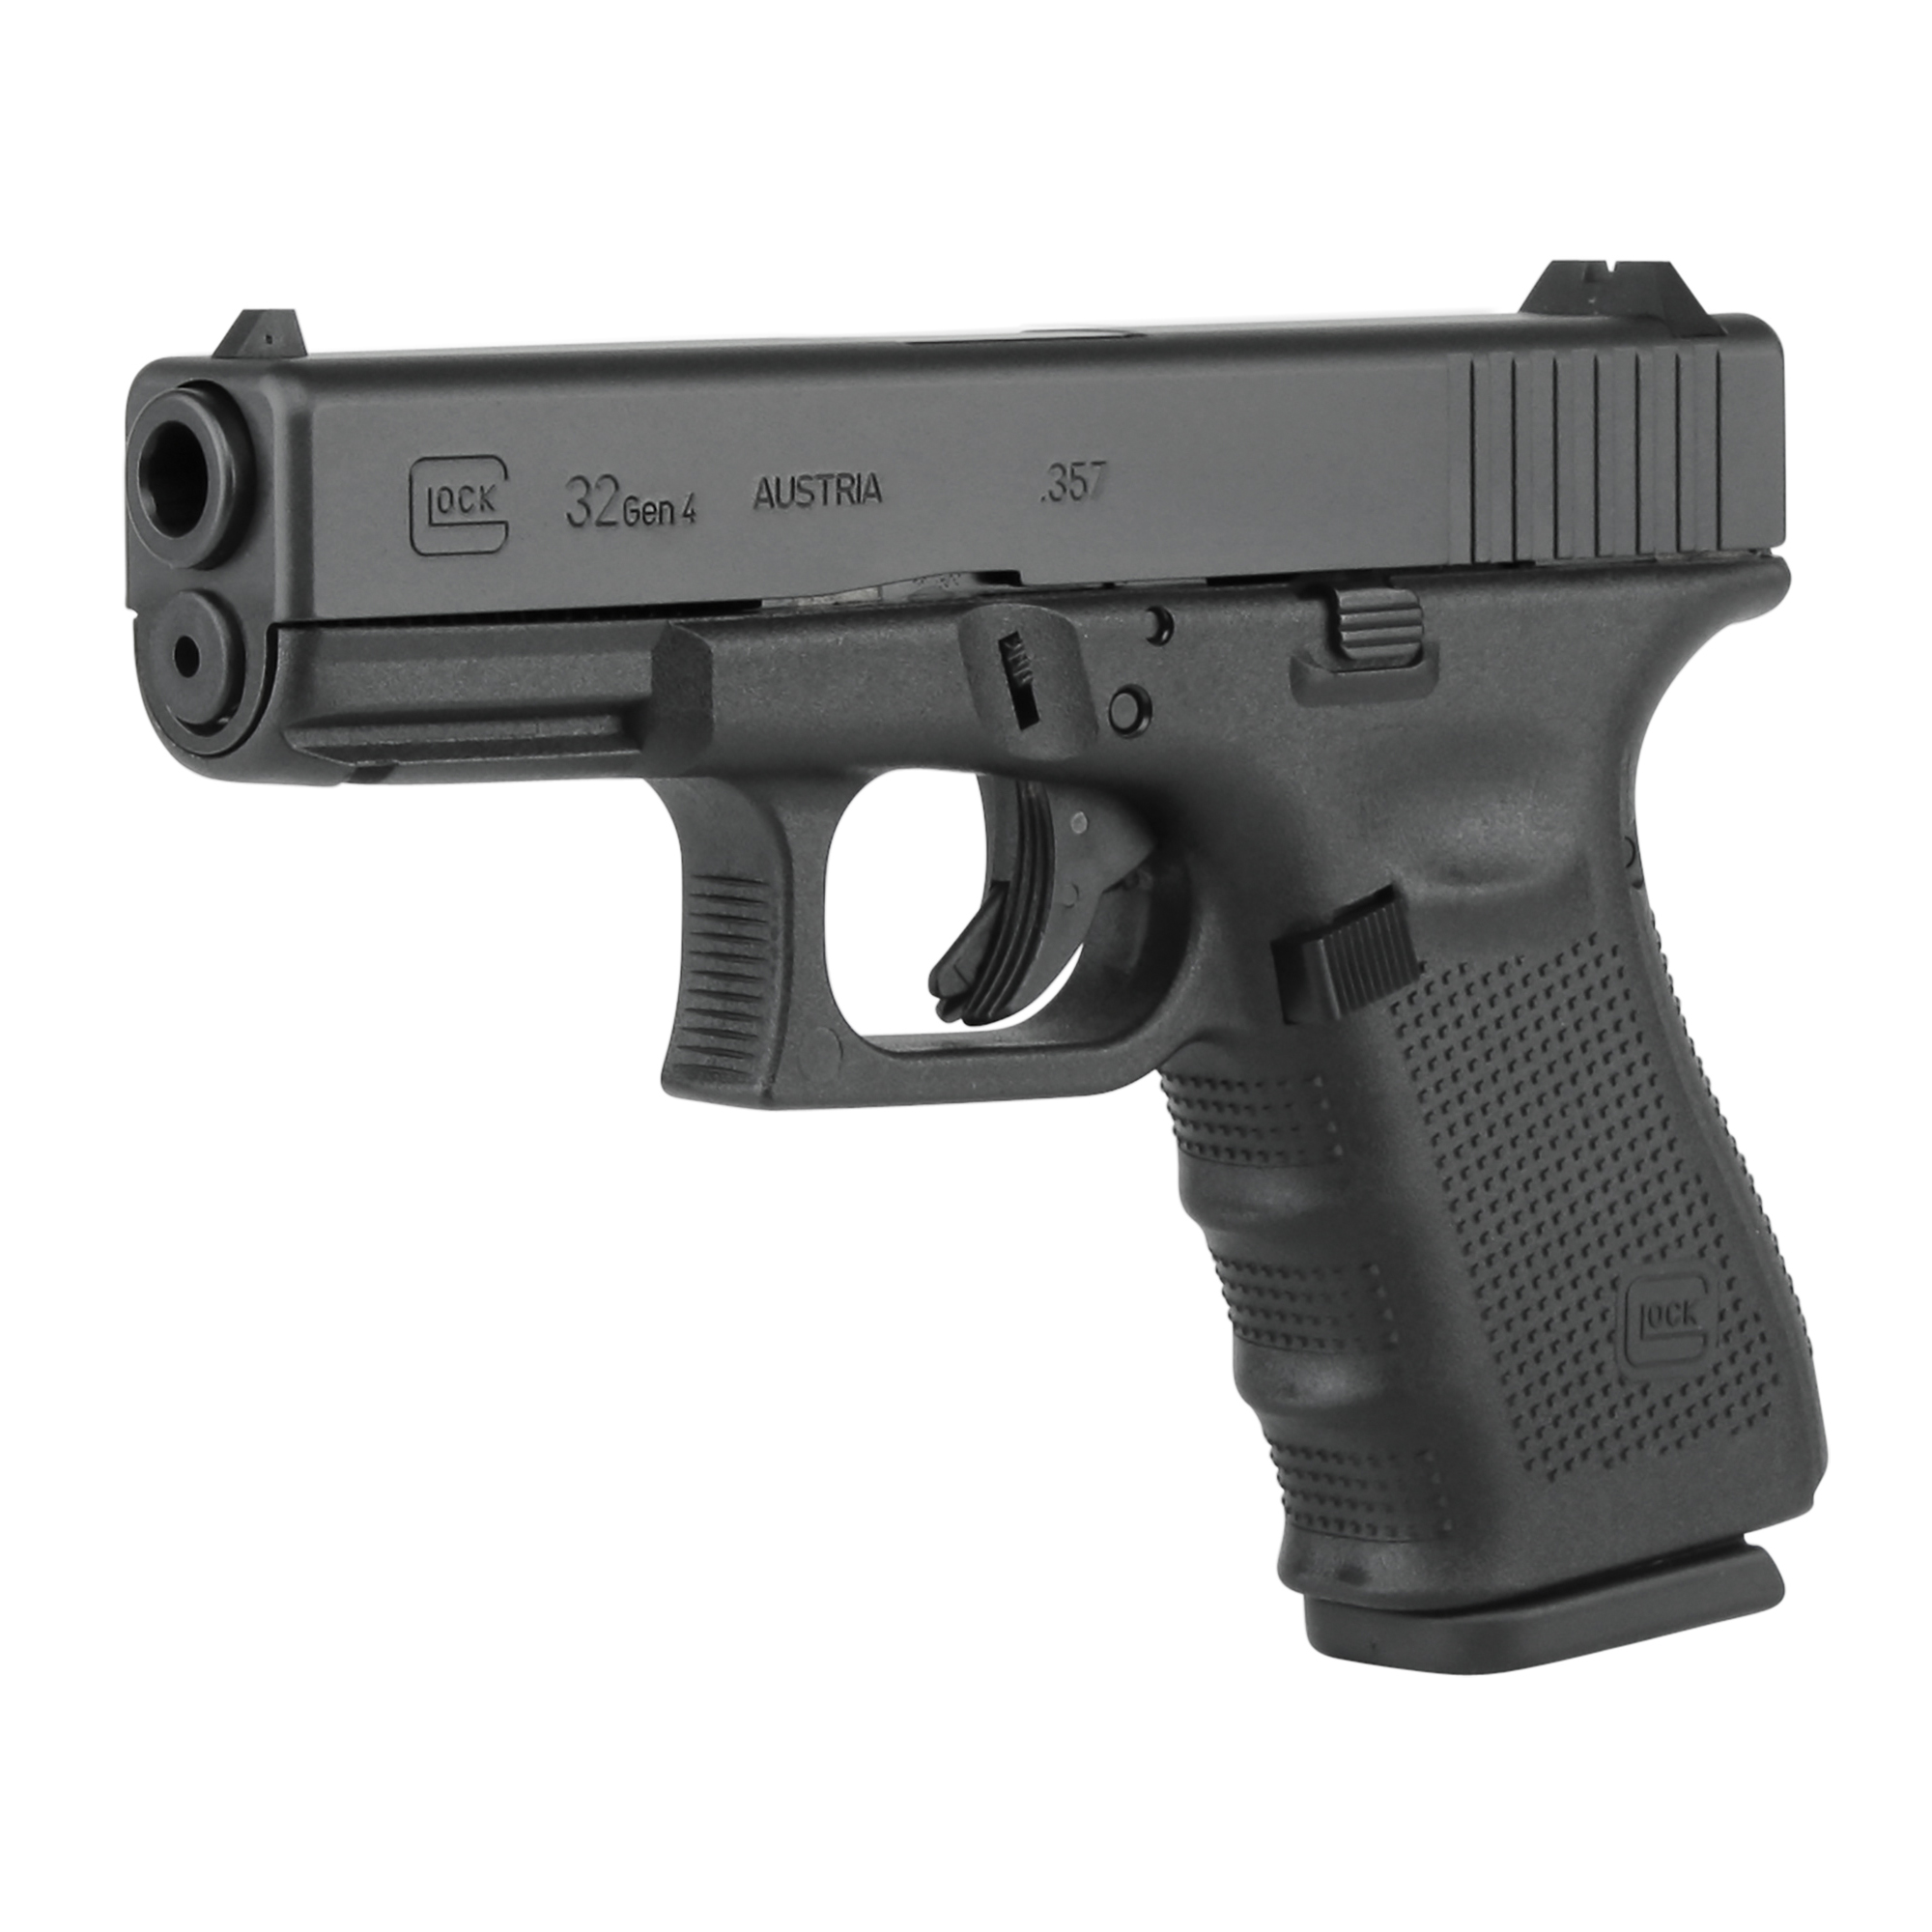 Glock, 32 Gen4, Striker Fired, Semi-automatic, Polymer Frame Pistol, Compact, 357 SIG, 4.02" Barrel, Matte Finish, Black, Fixed Sights, 13 Rounds, 3 Magazines